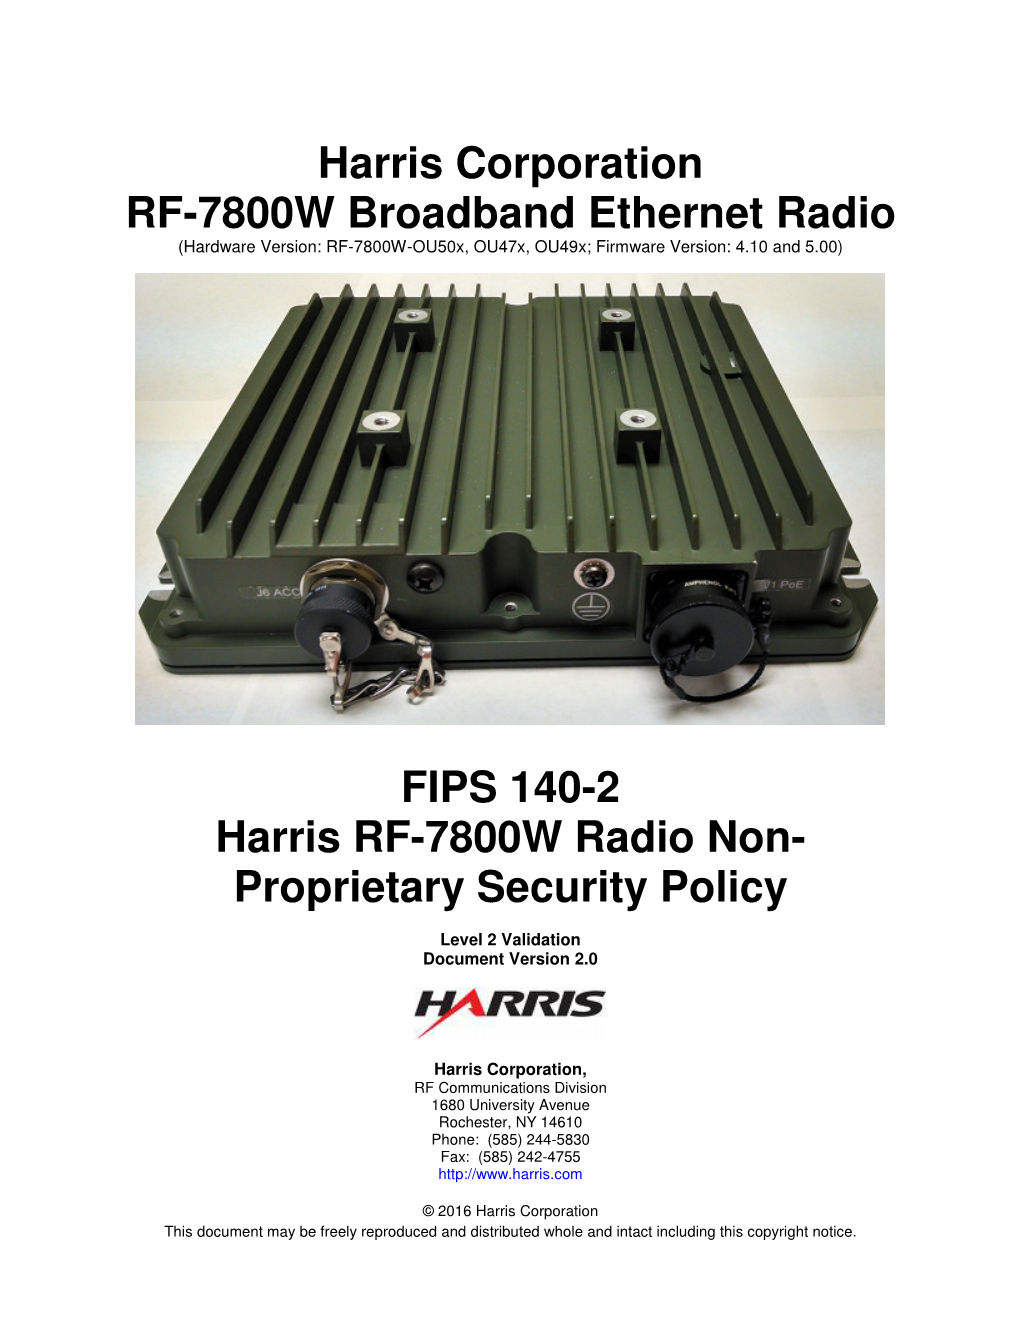 FIPS 140-2 Harris RF-7800W Radio Non- Proprietary Security Policy